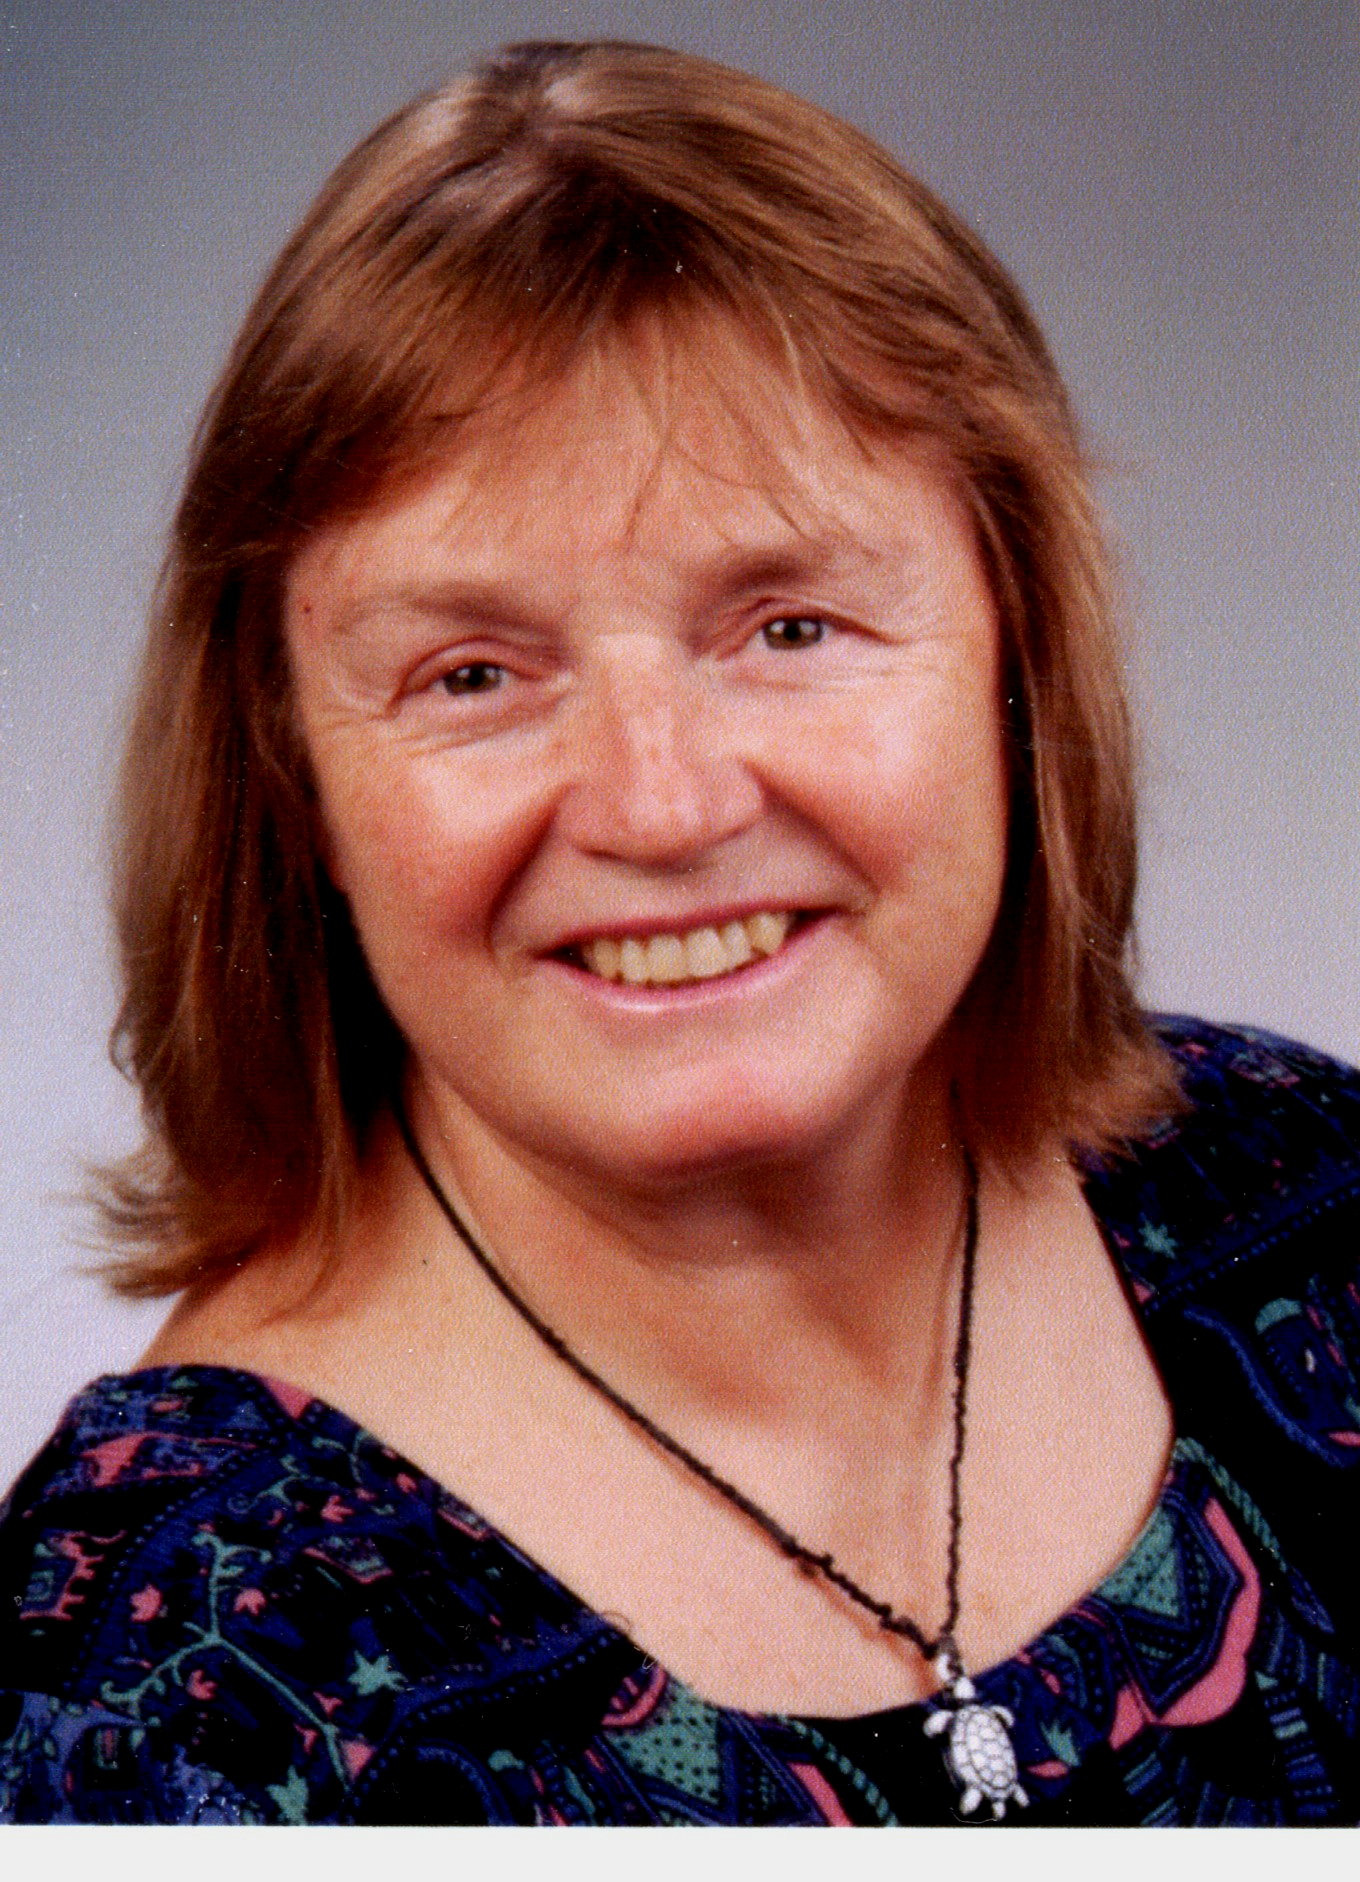 Prof. Bettina Harriehausen-Mühlbauer